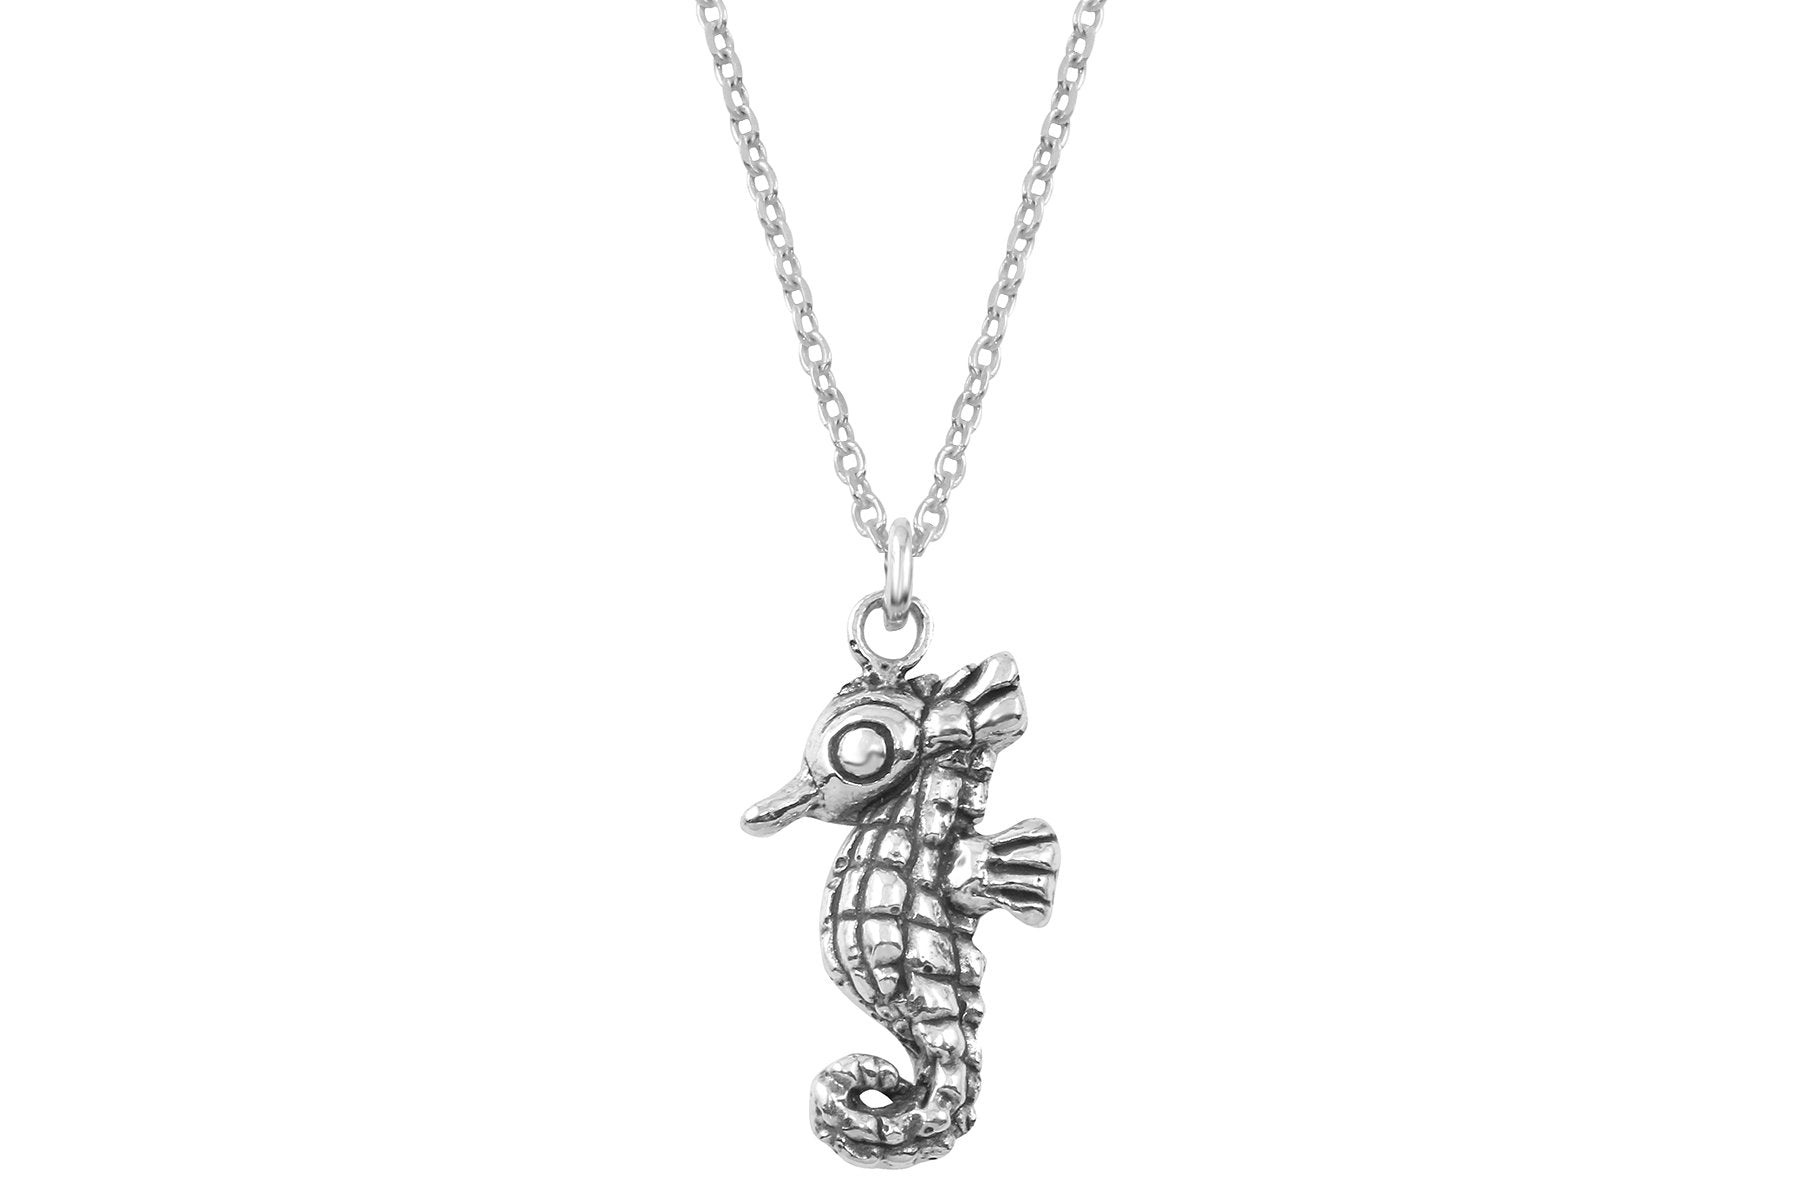 Tiny sterling silver seahorse charm necklace - ready to ship necklace Amanda K Lockrow 